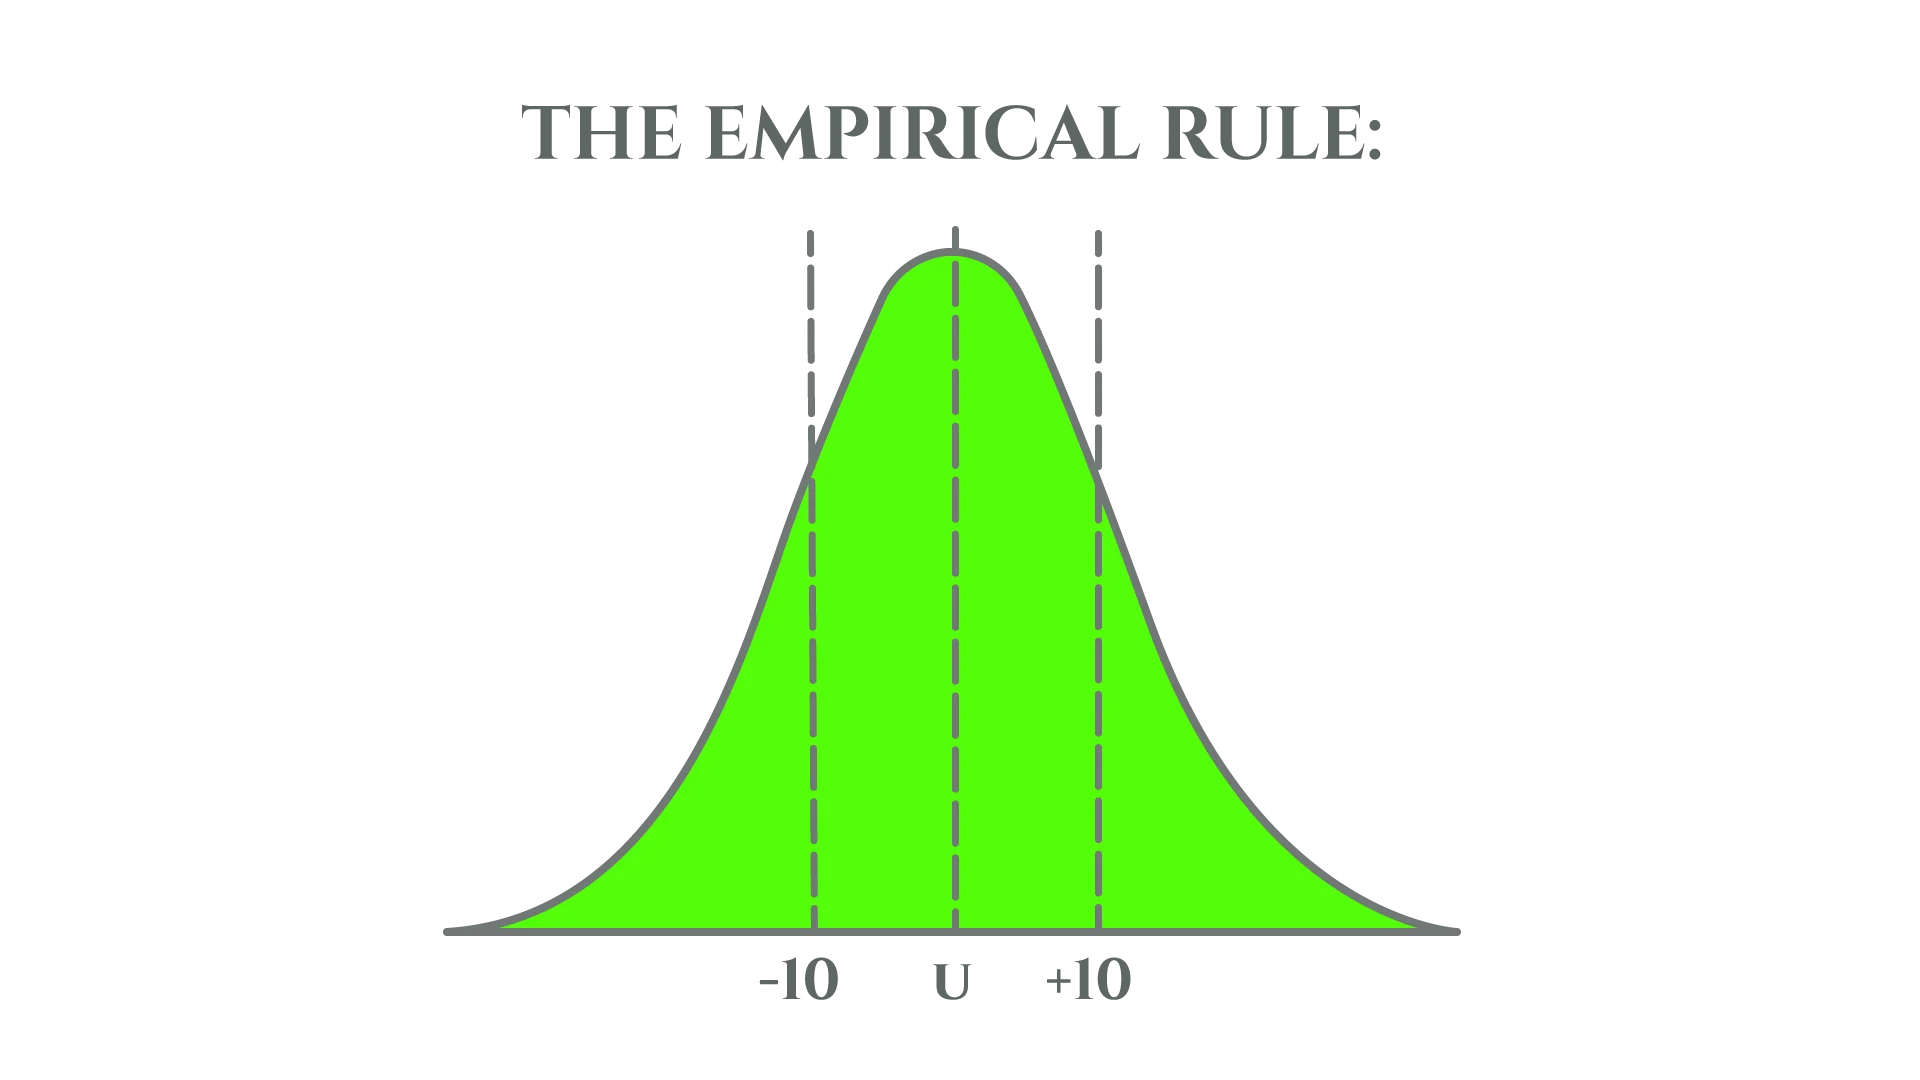 the empirical rule graph